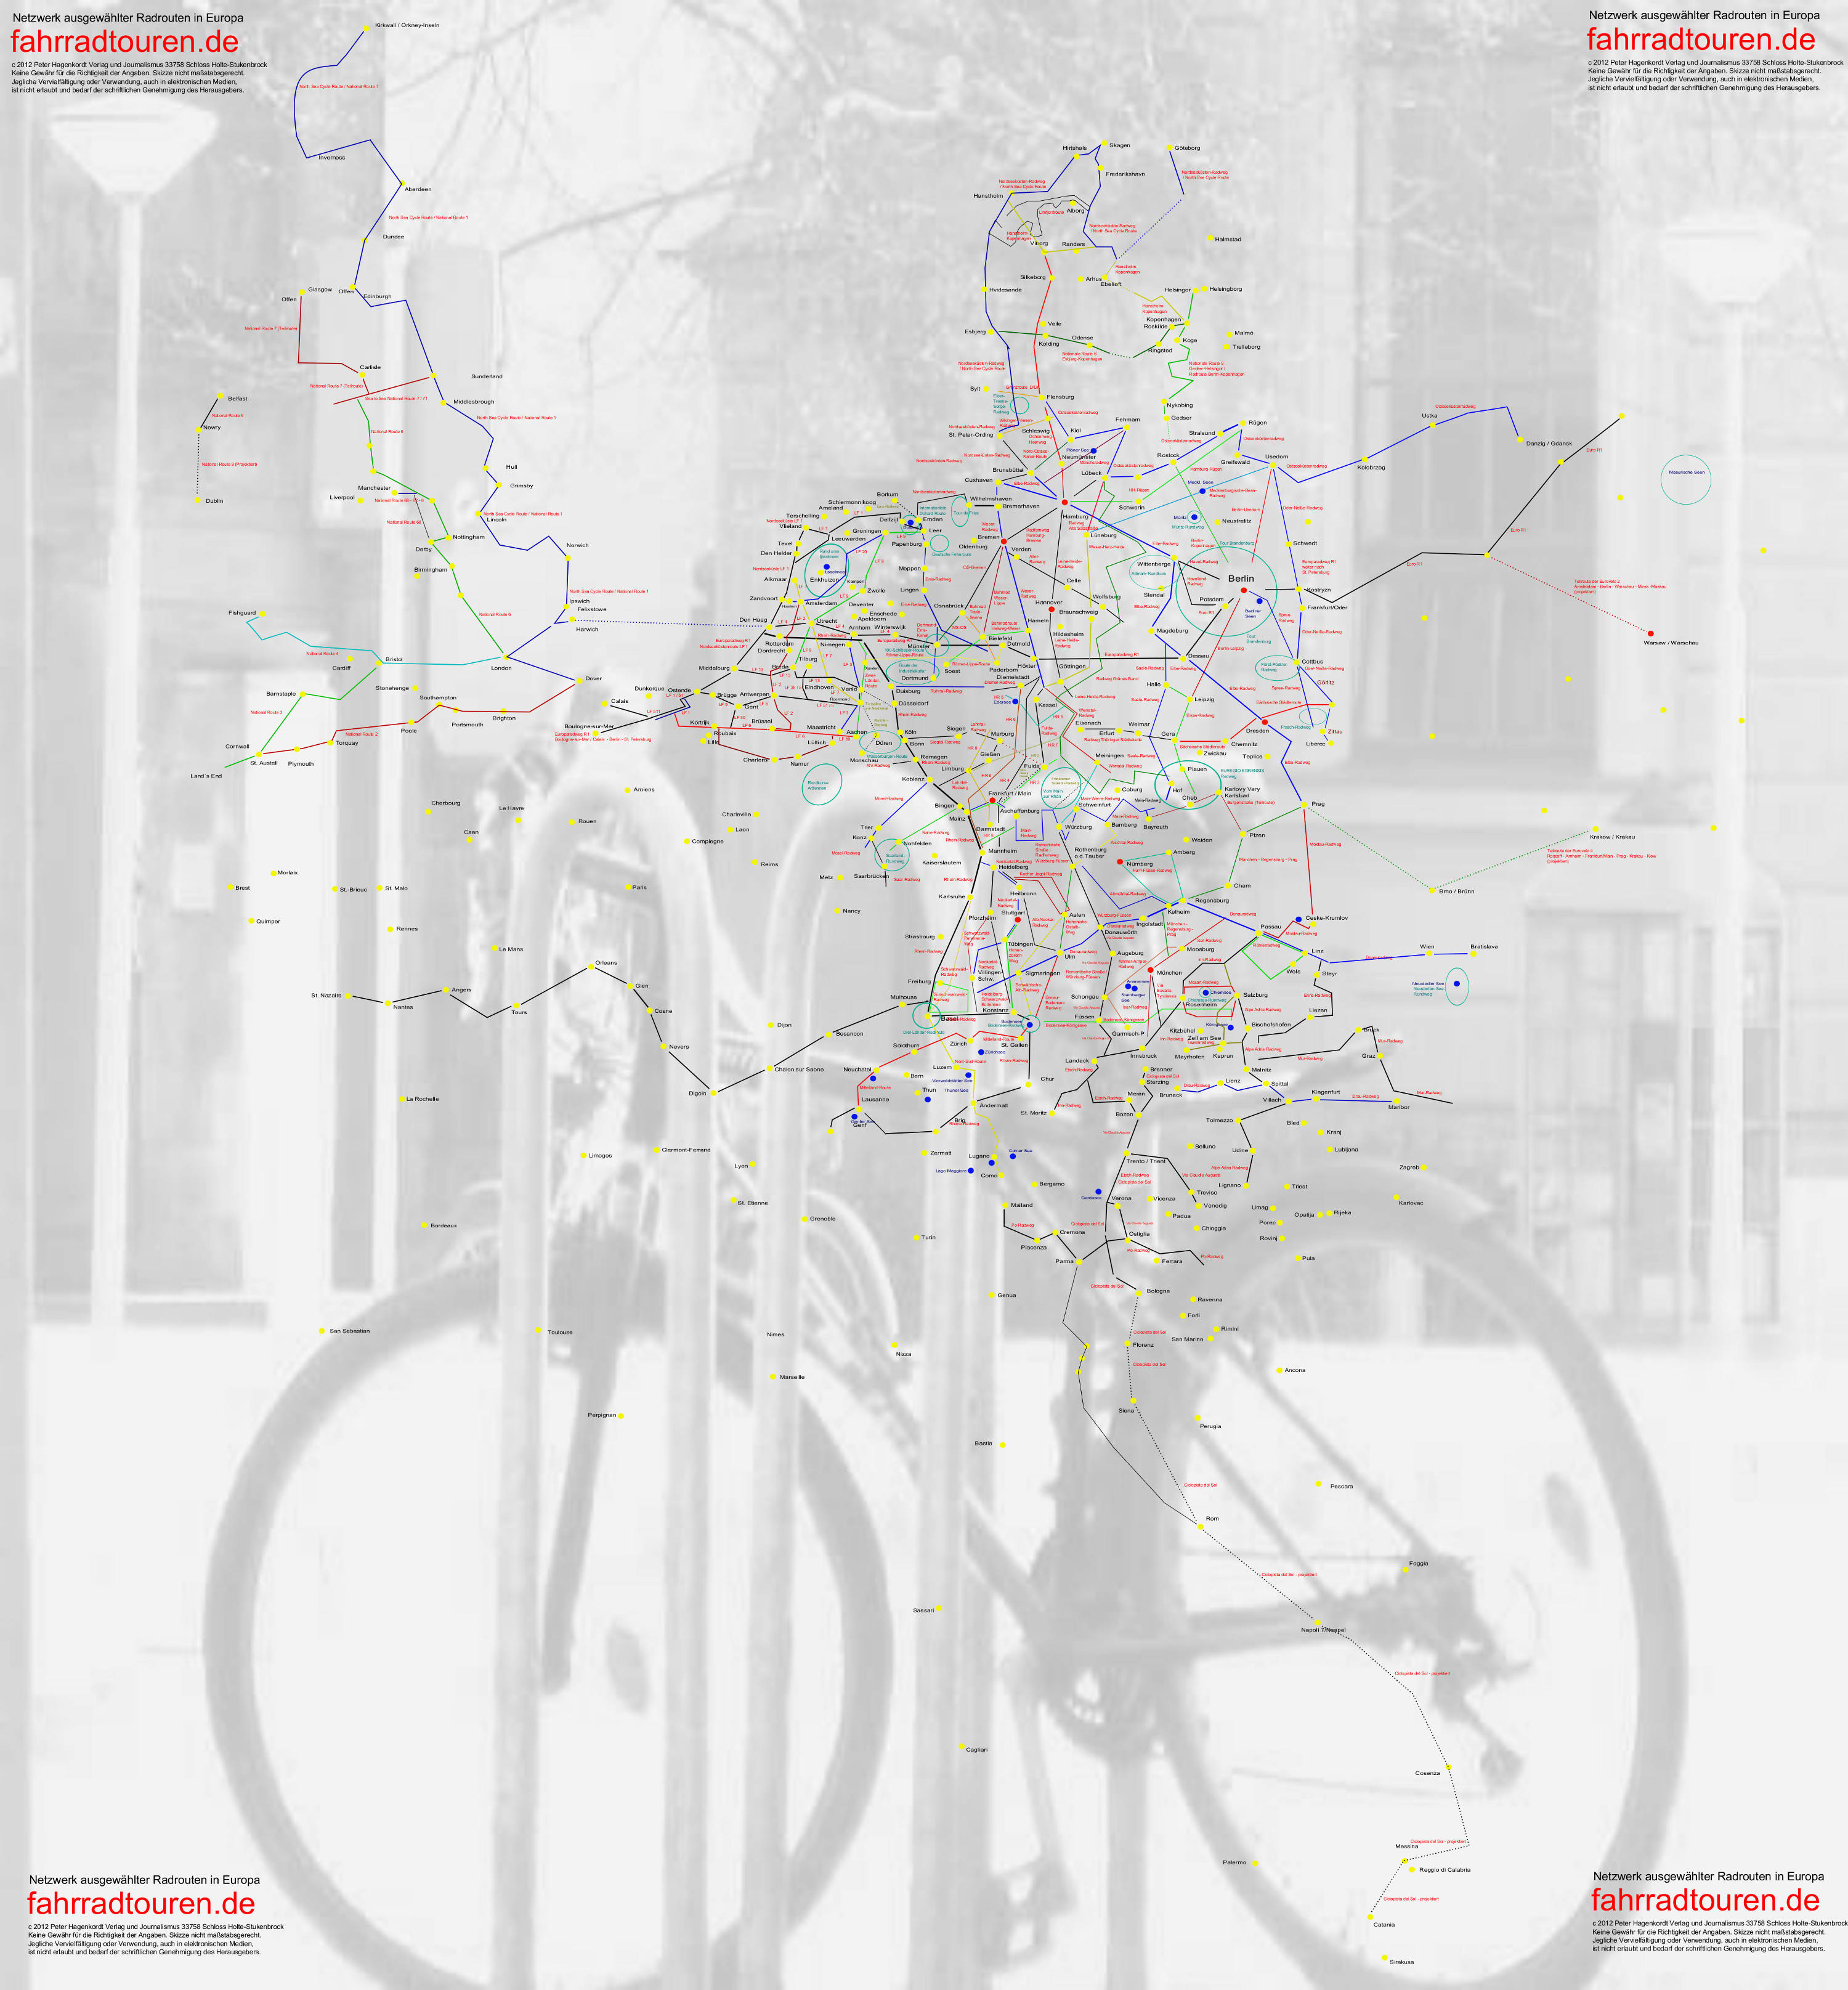 Radwege Netzwerk Europa Skizze bei fahrradtouren.de